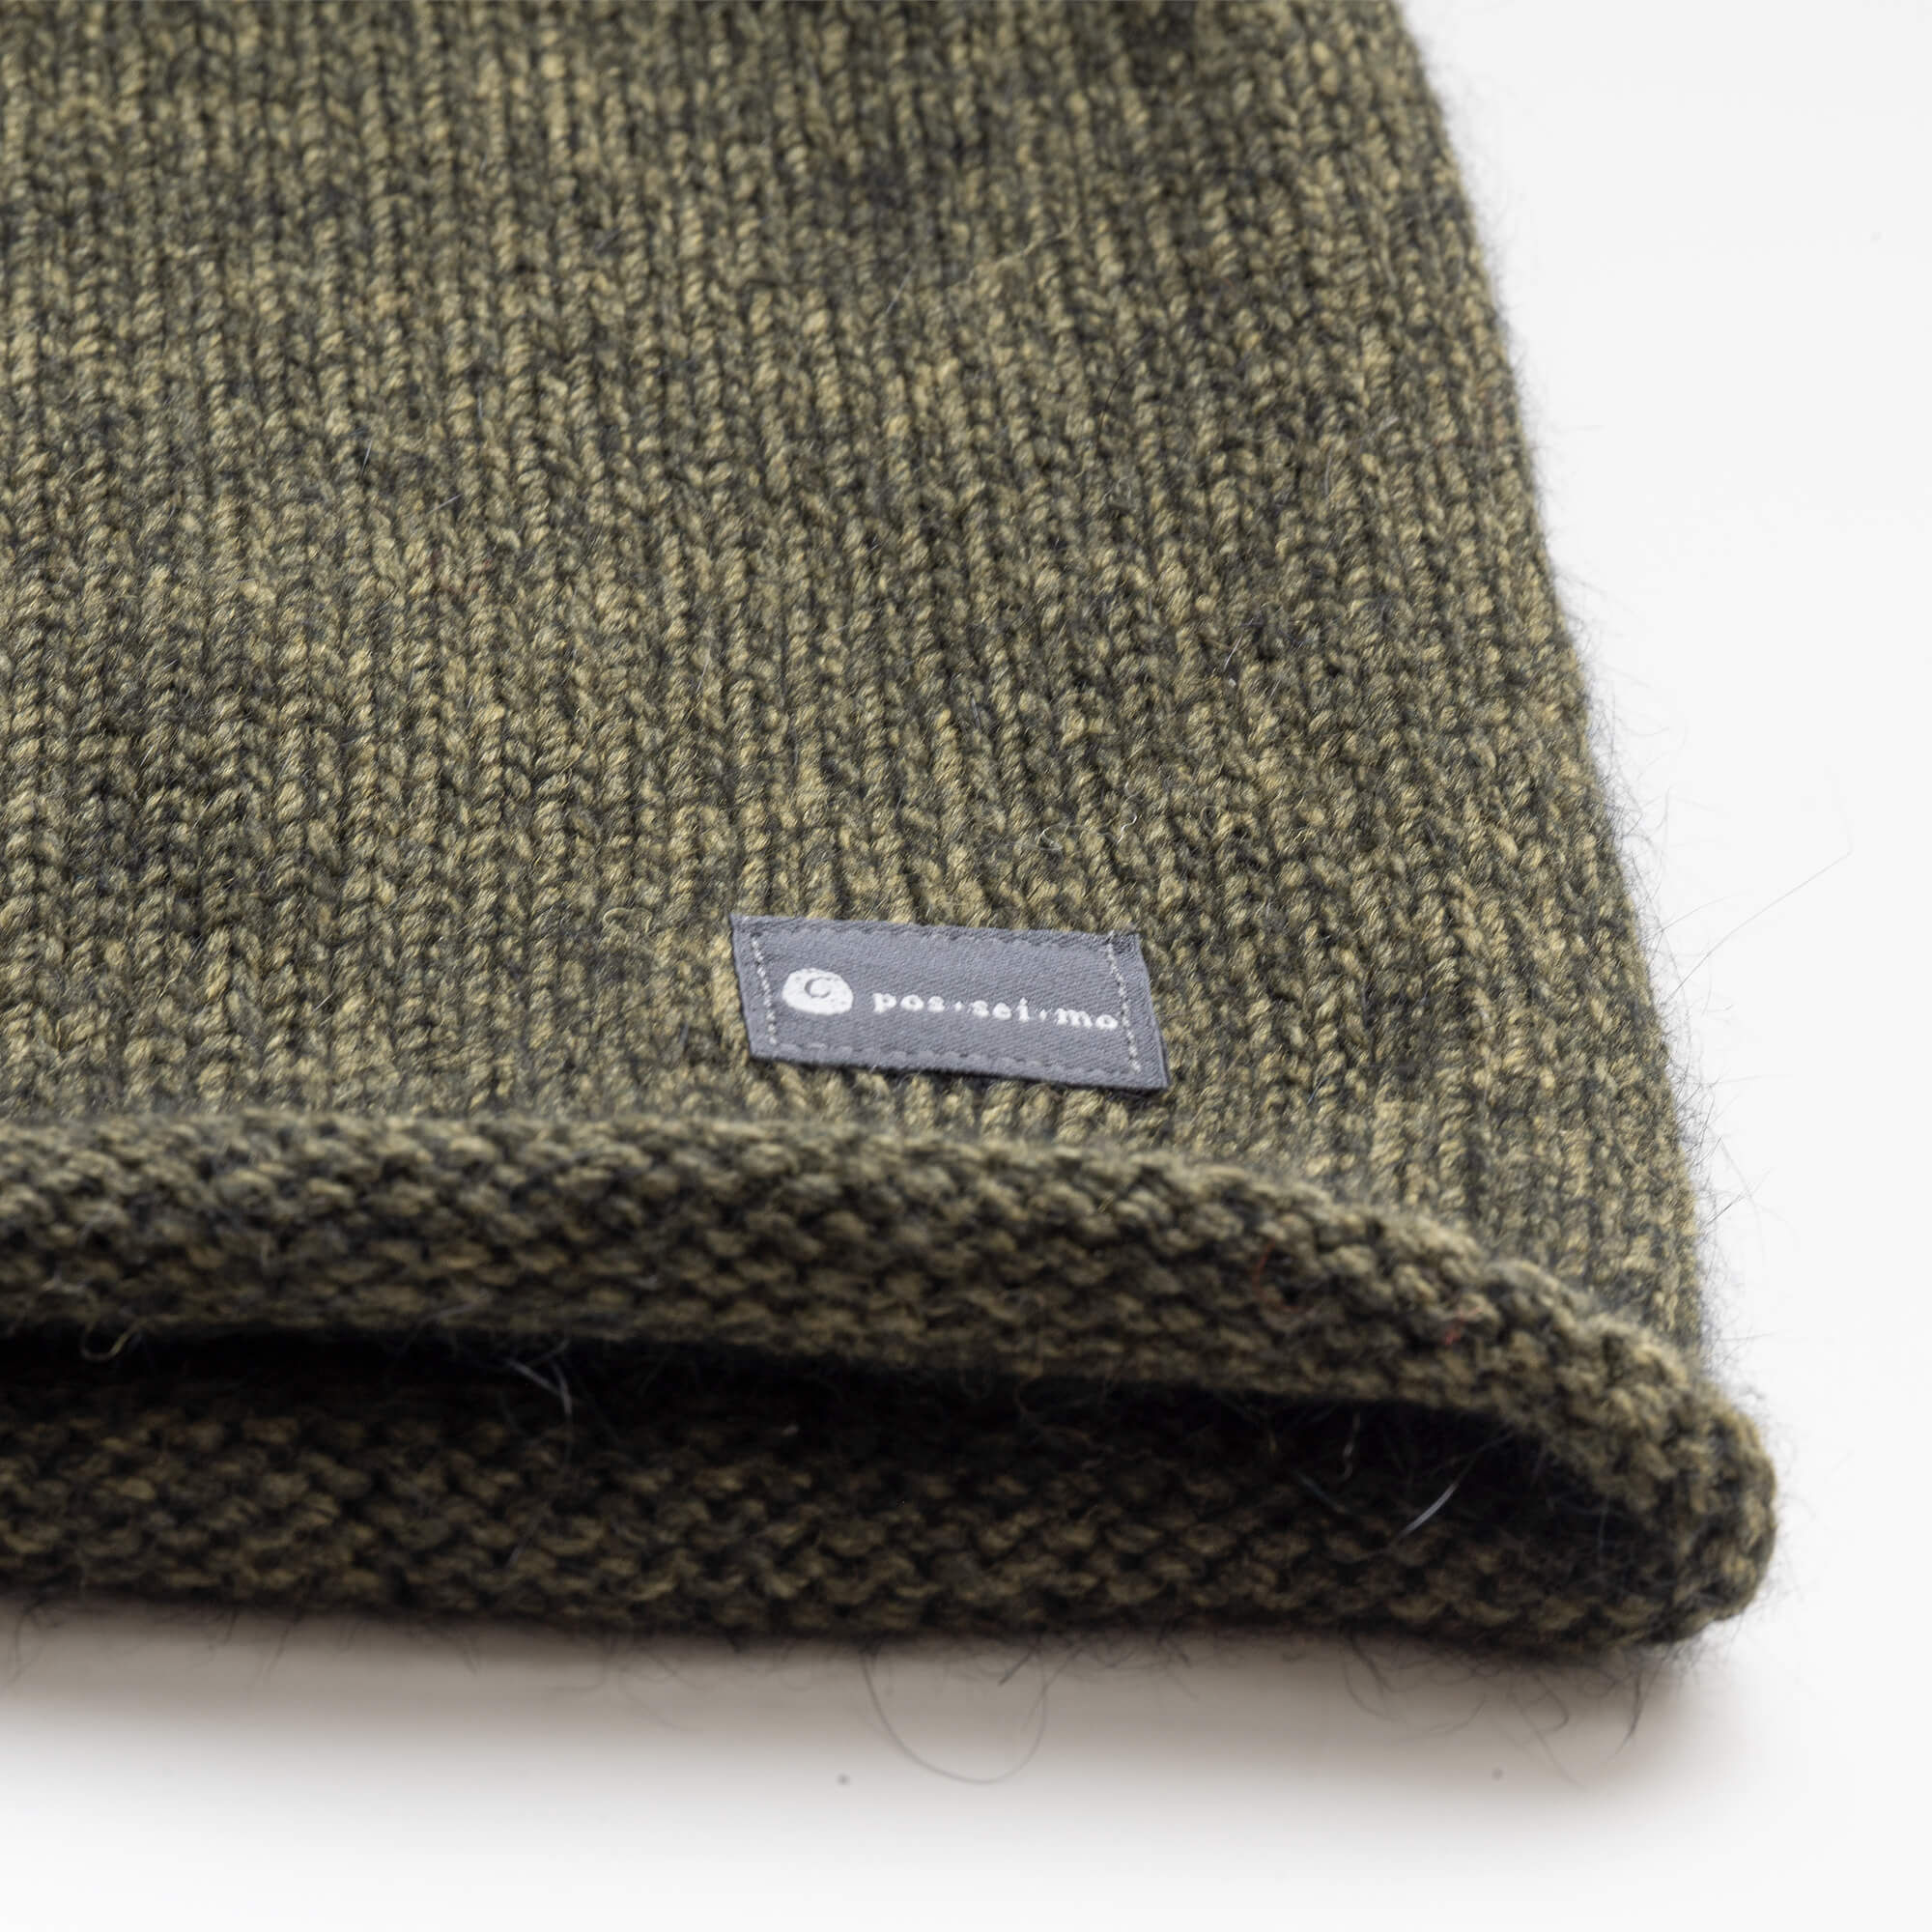 Mütze mit Rollrand - seamless knitting